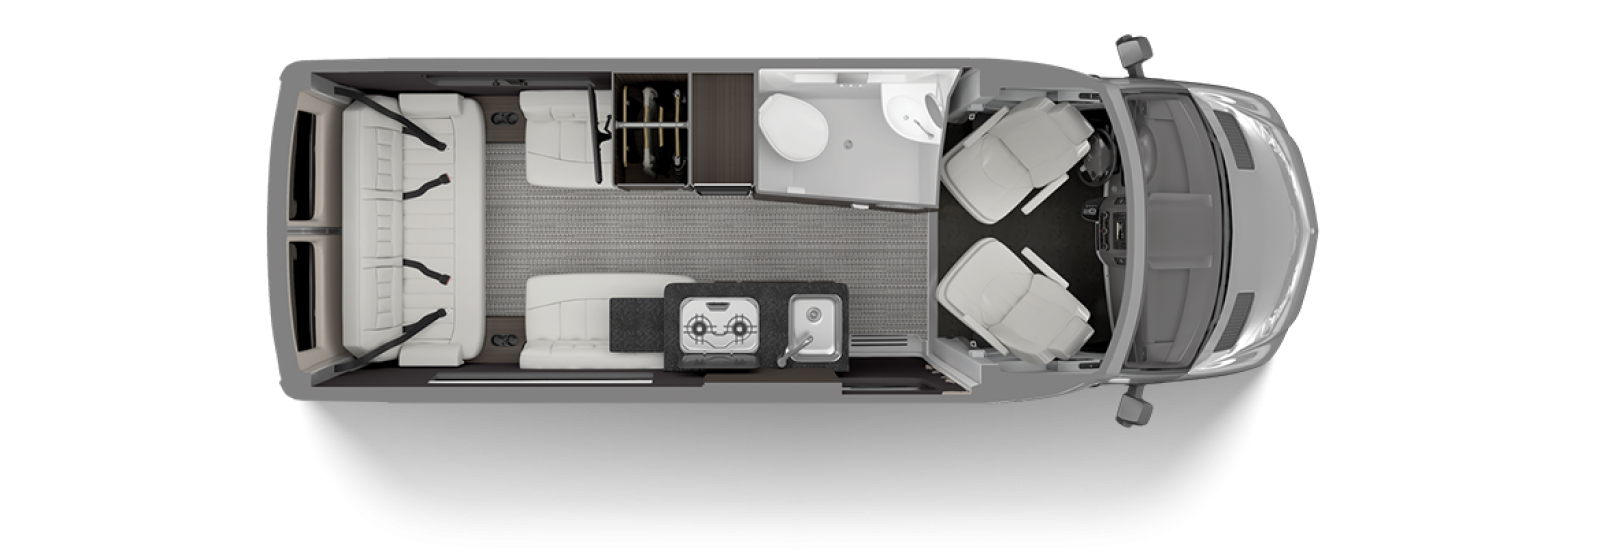 Airstream Interstate 19 Floor Plan